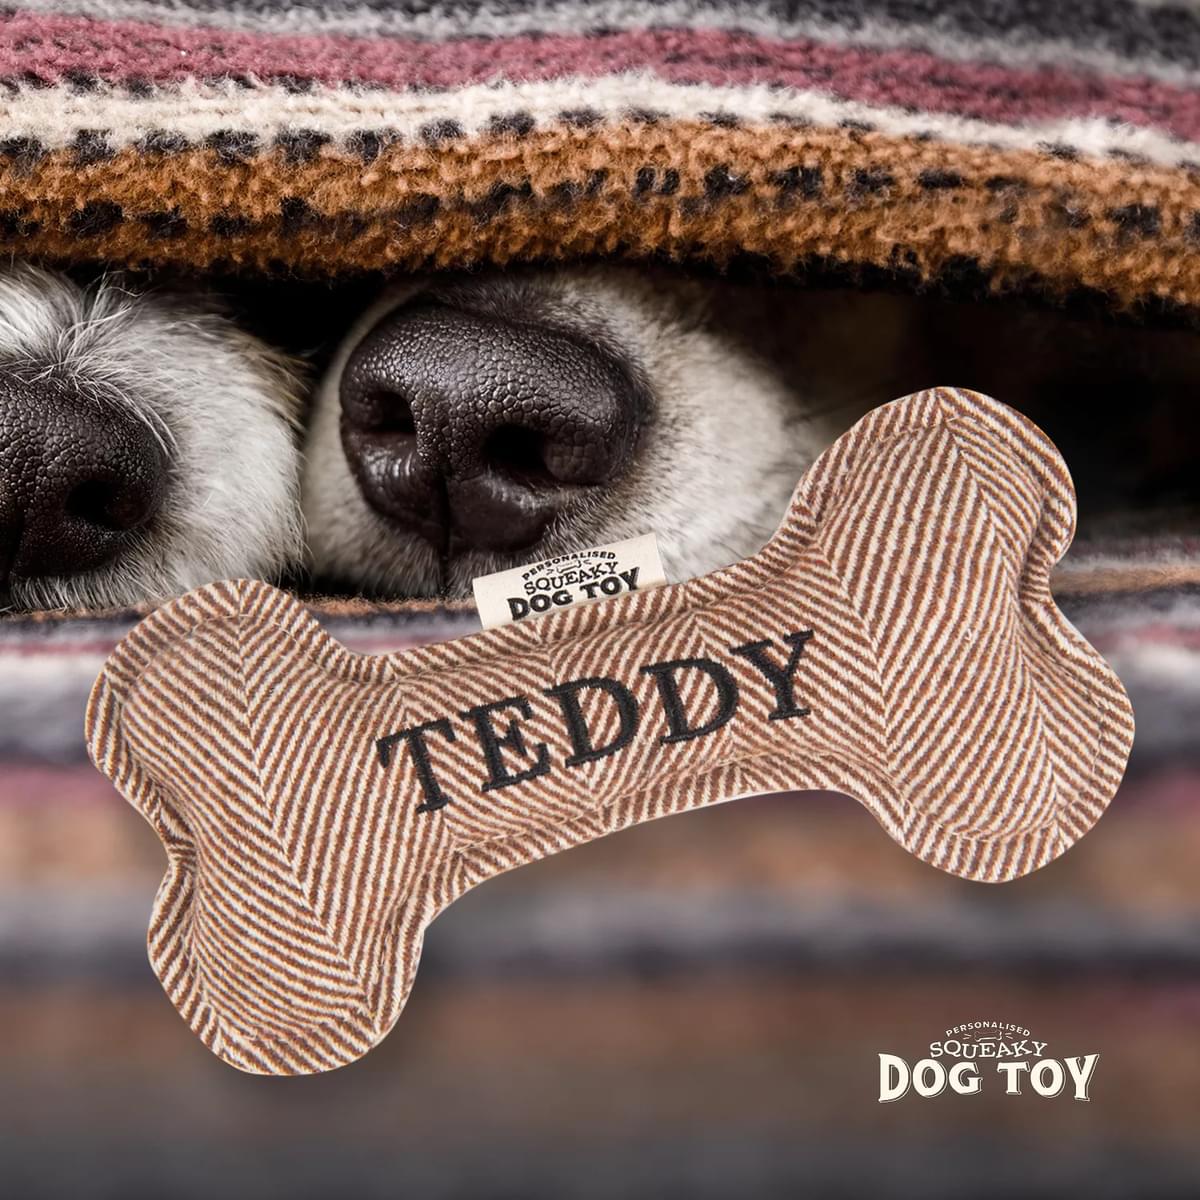 Named Squeaky Dog Toy- Teddy. Bone shaped herringbone tweed pattern dog toy. 